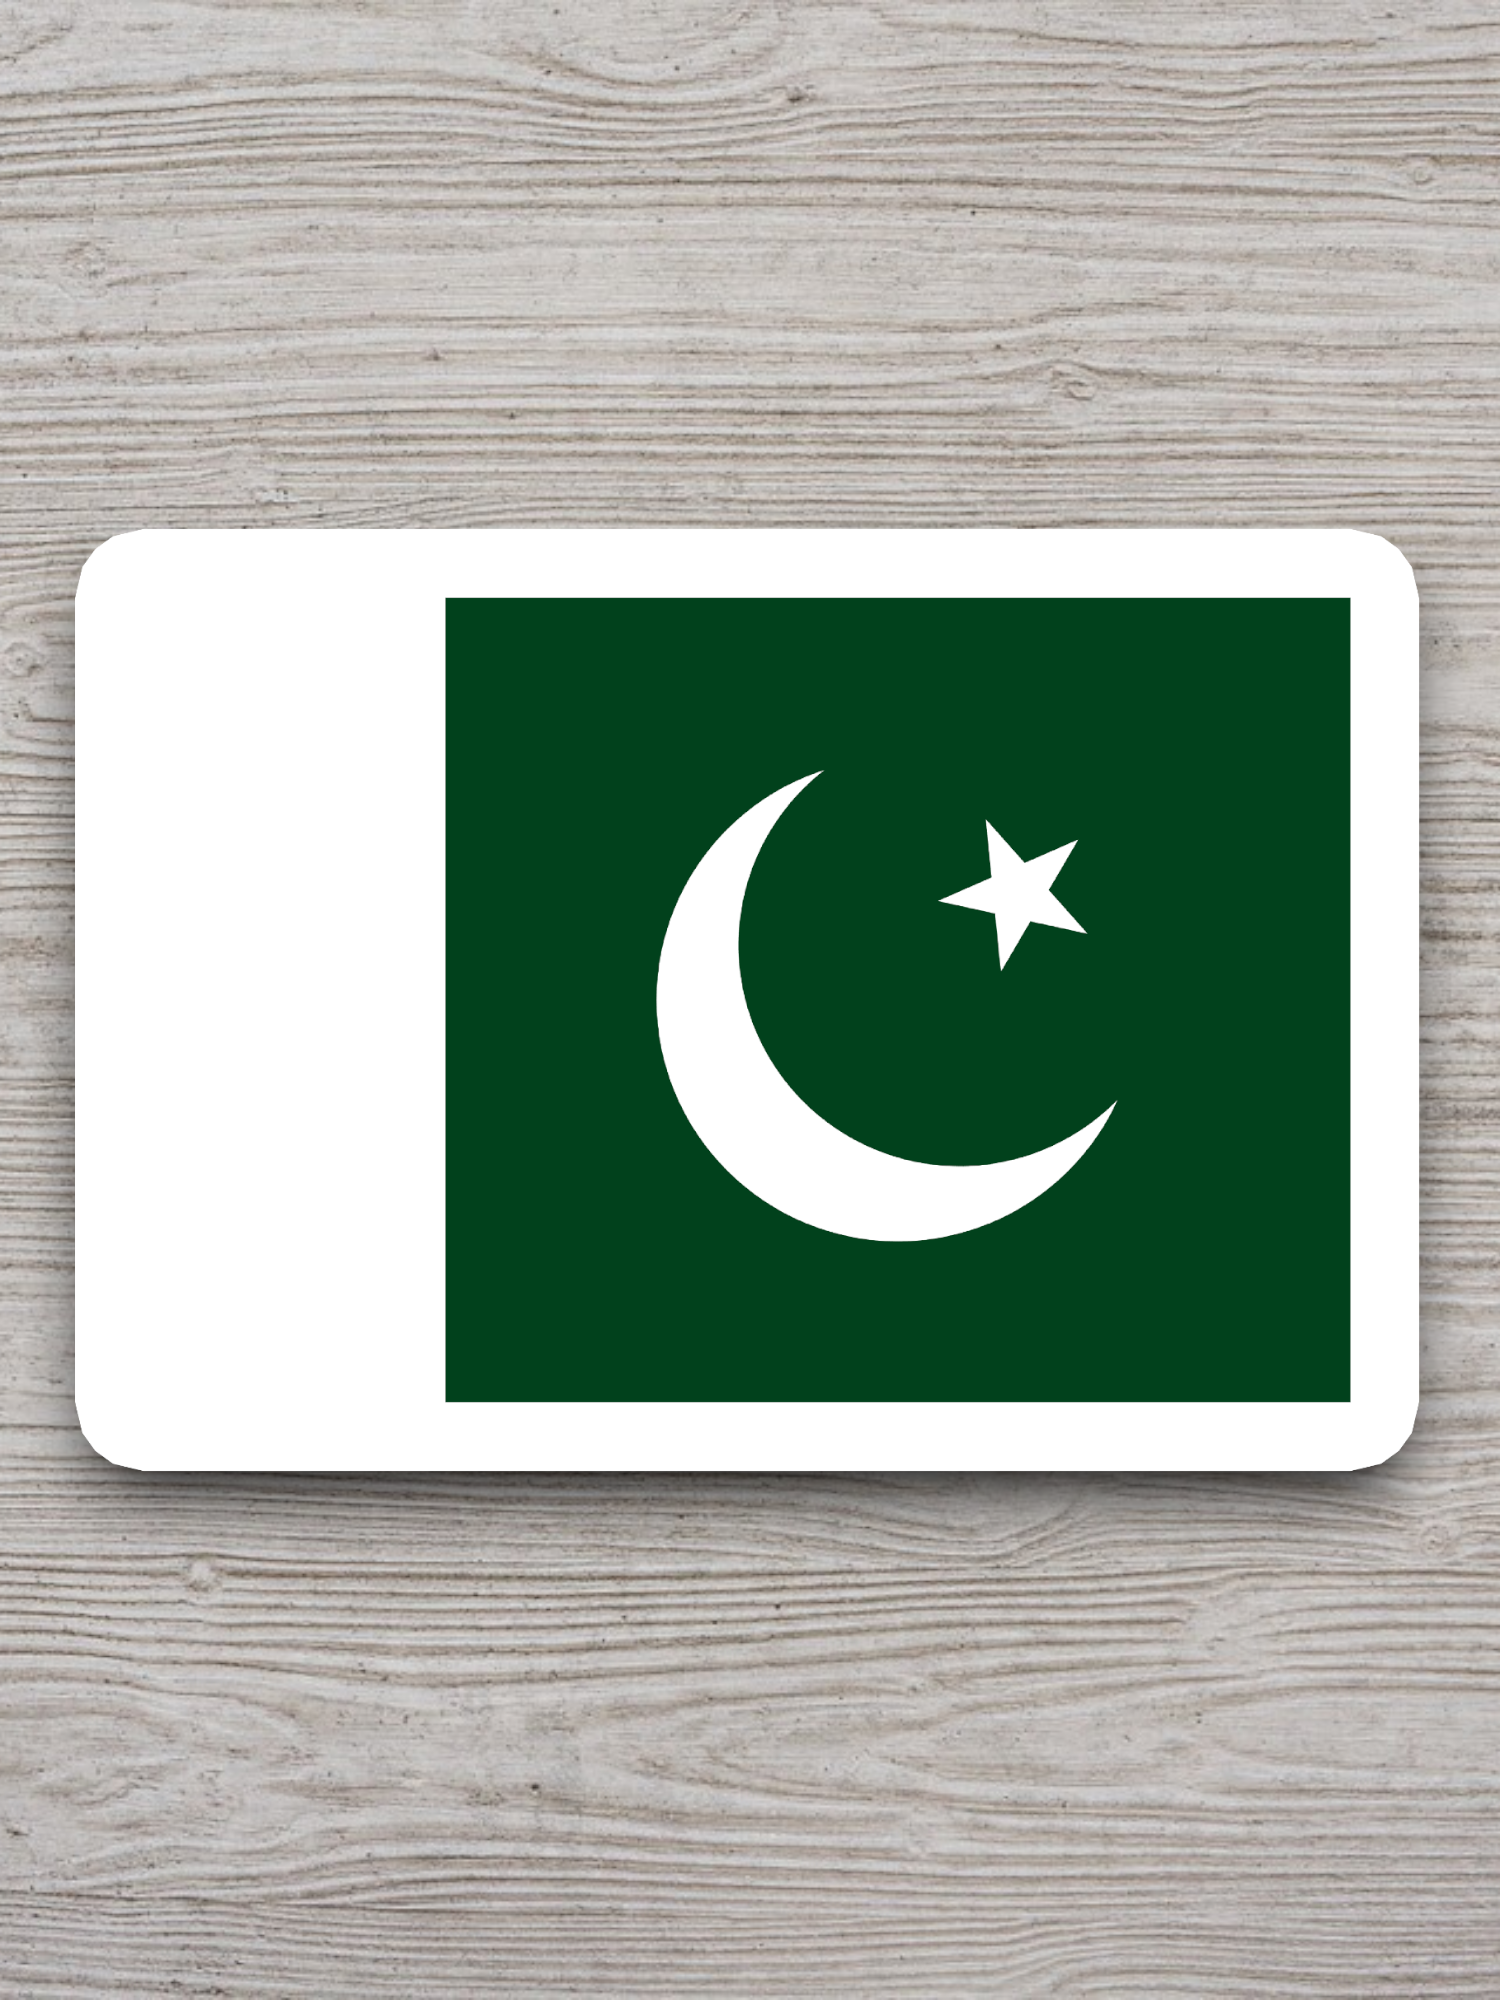 Pakistan Flag - International Country Flag Sticker